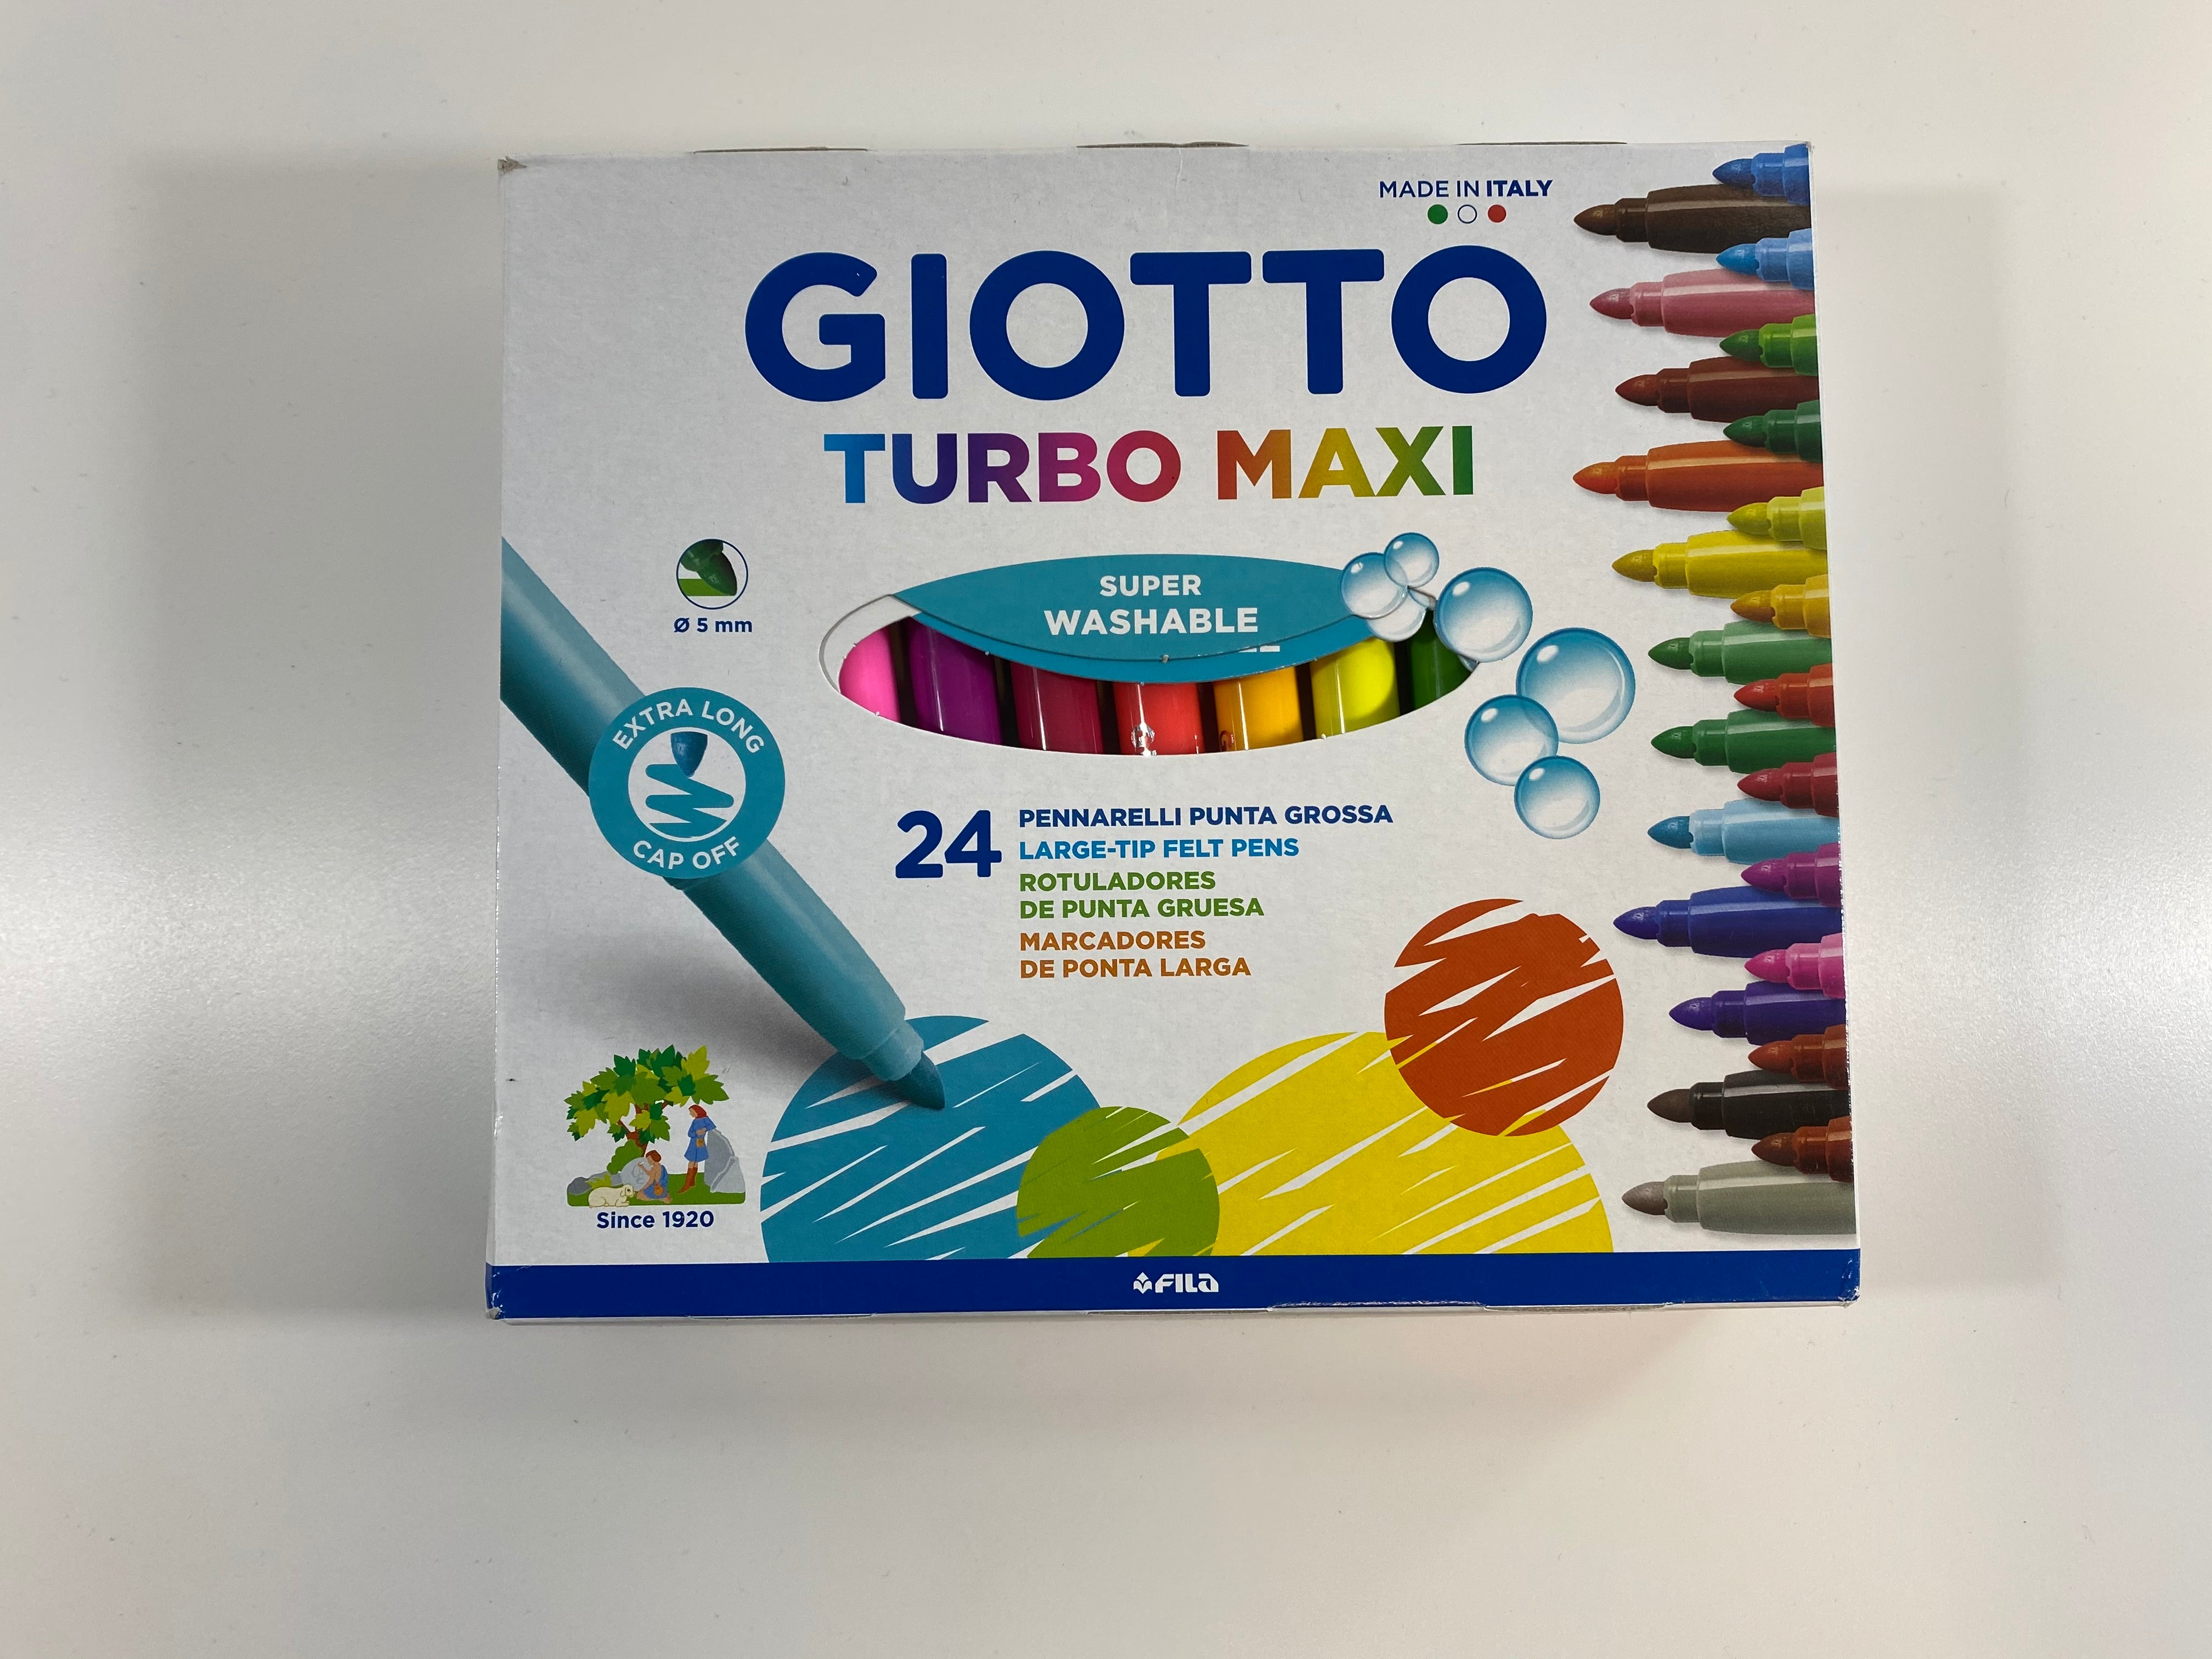 Giotto turbo maxi 24 pennarelli punta grossa